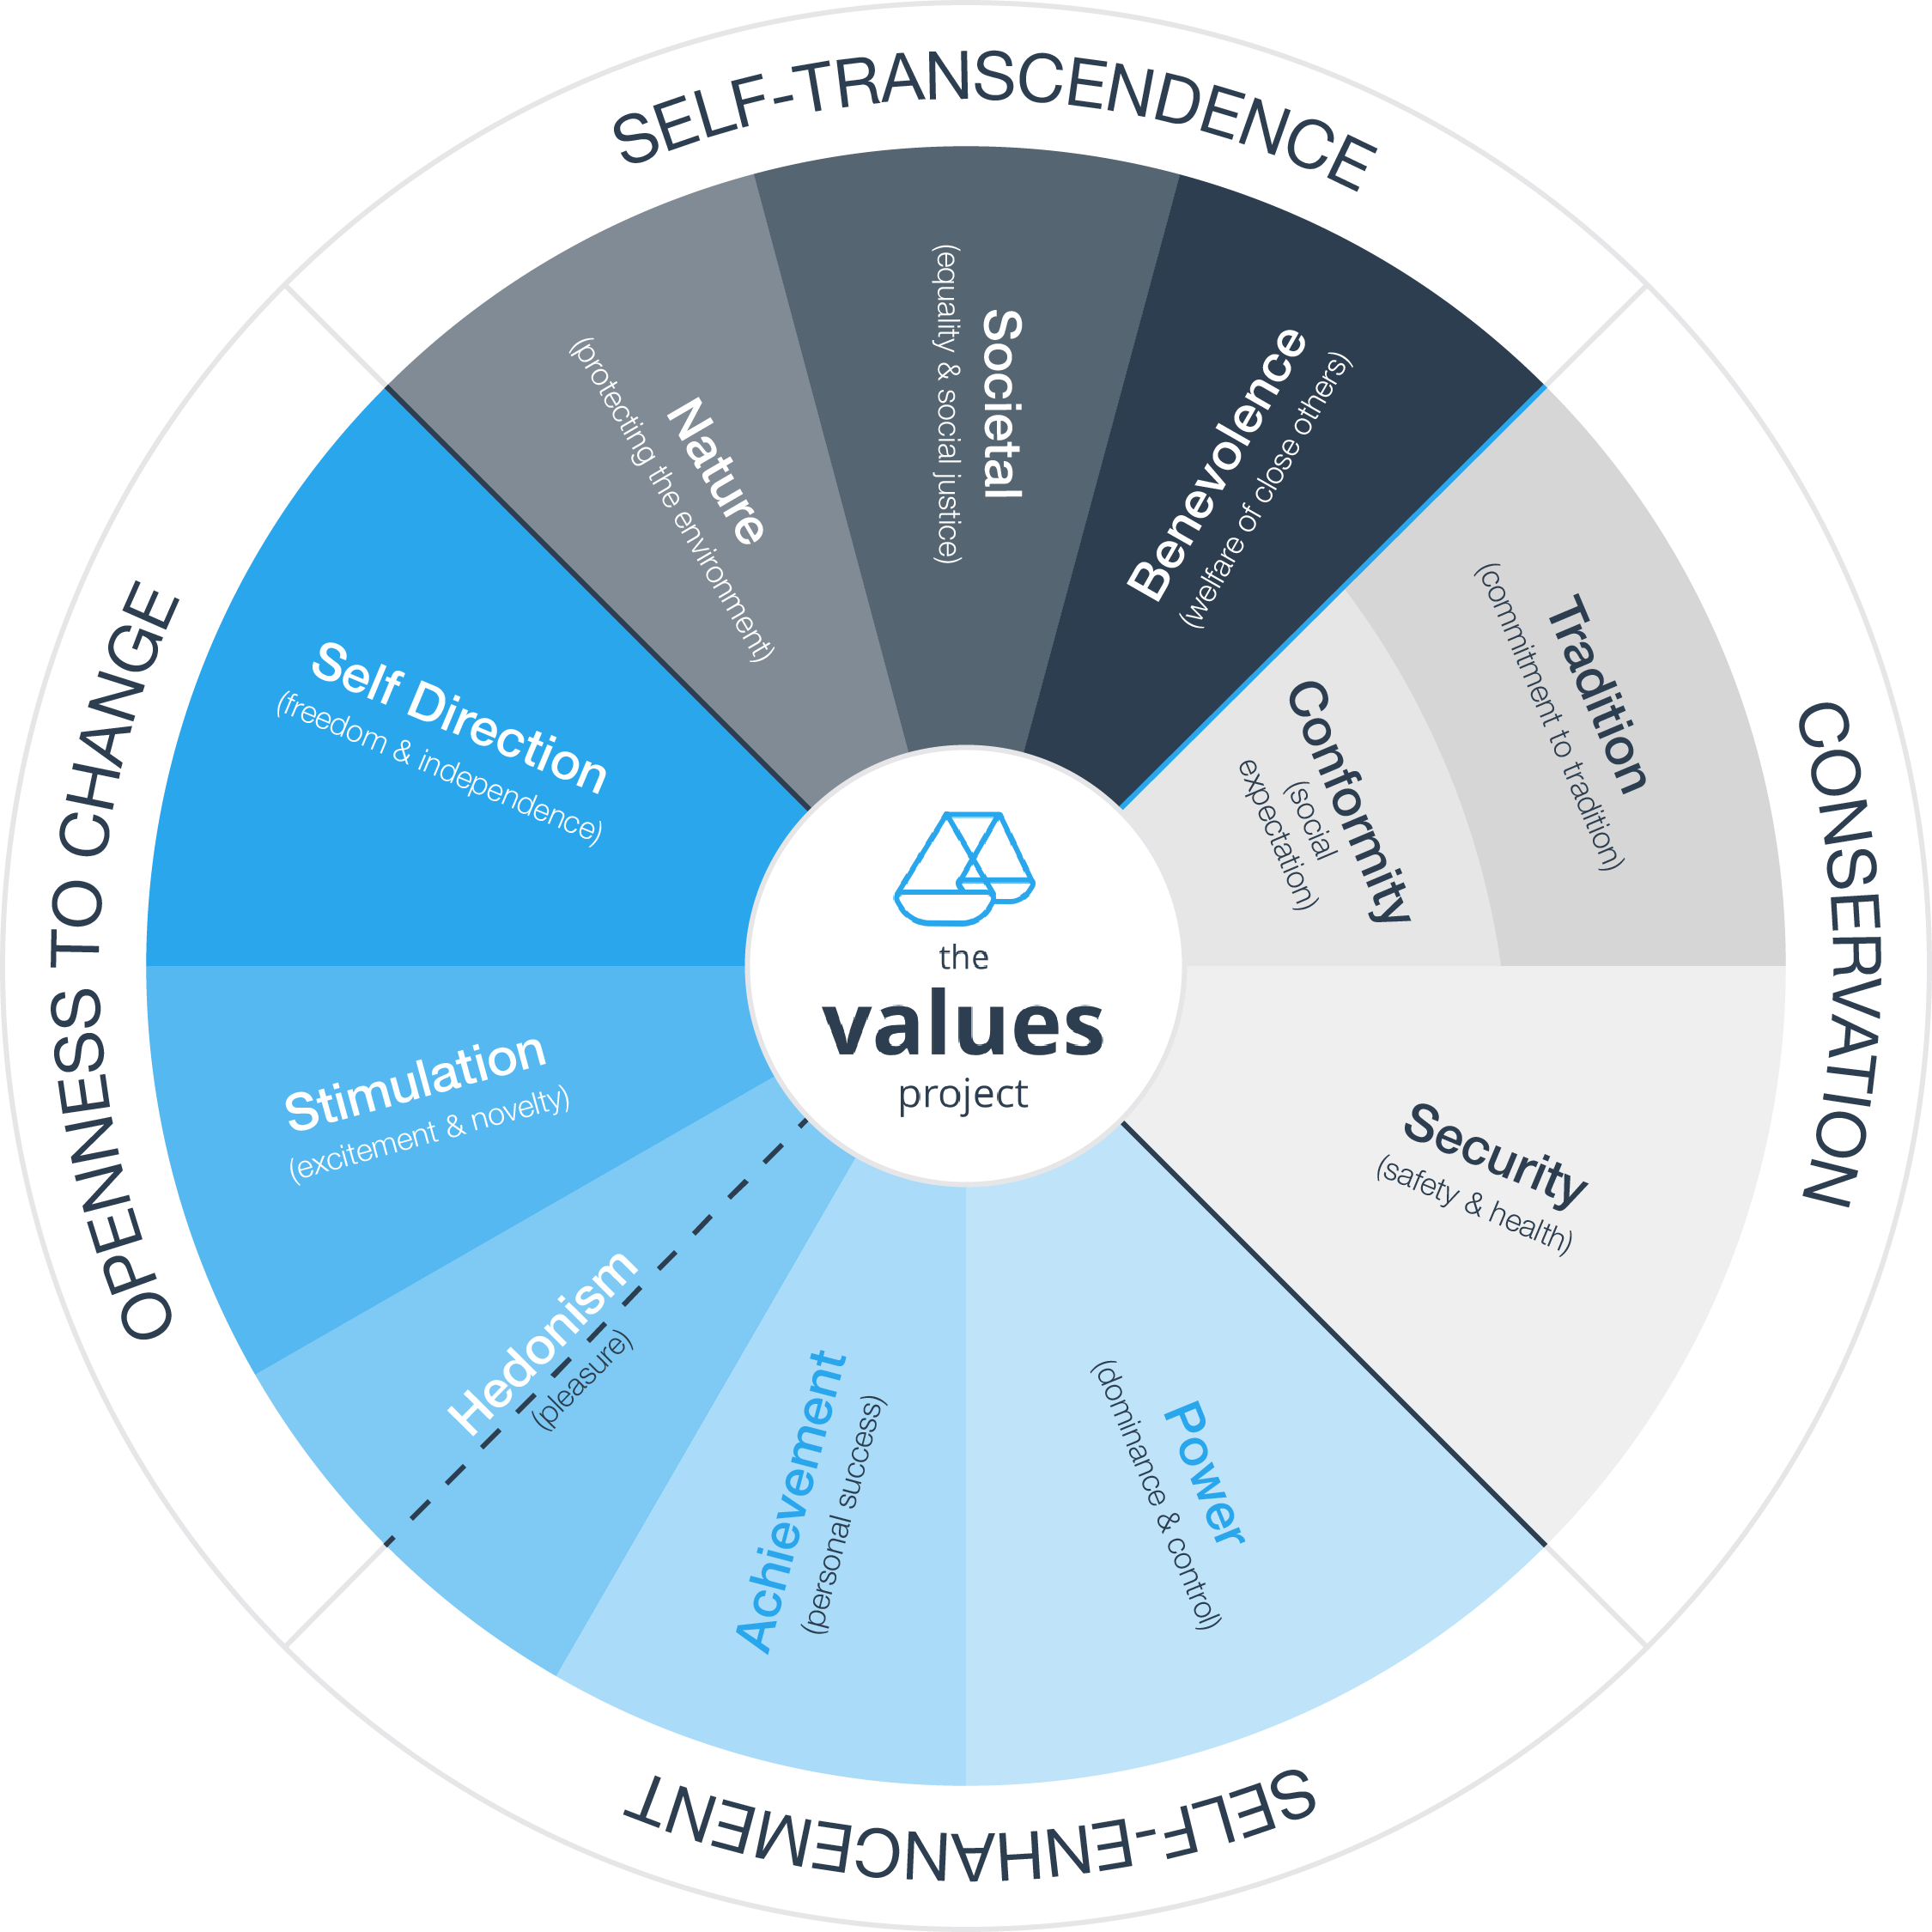 personal values vs professional values